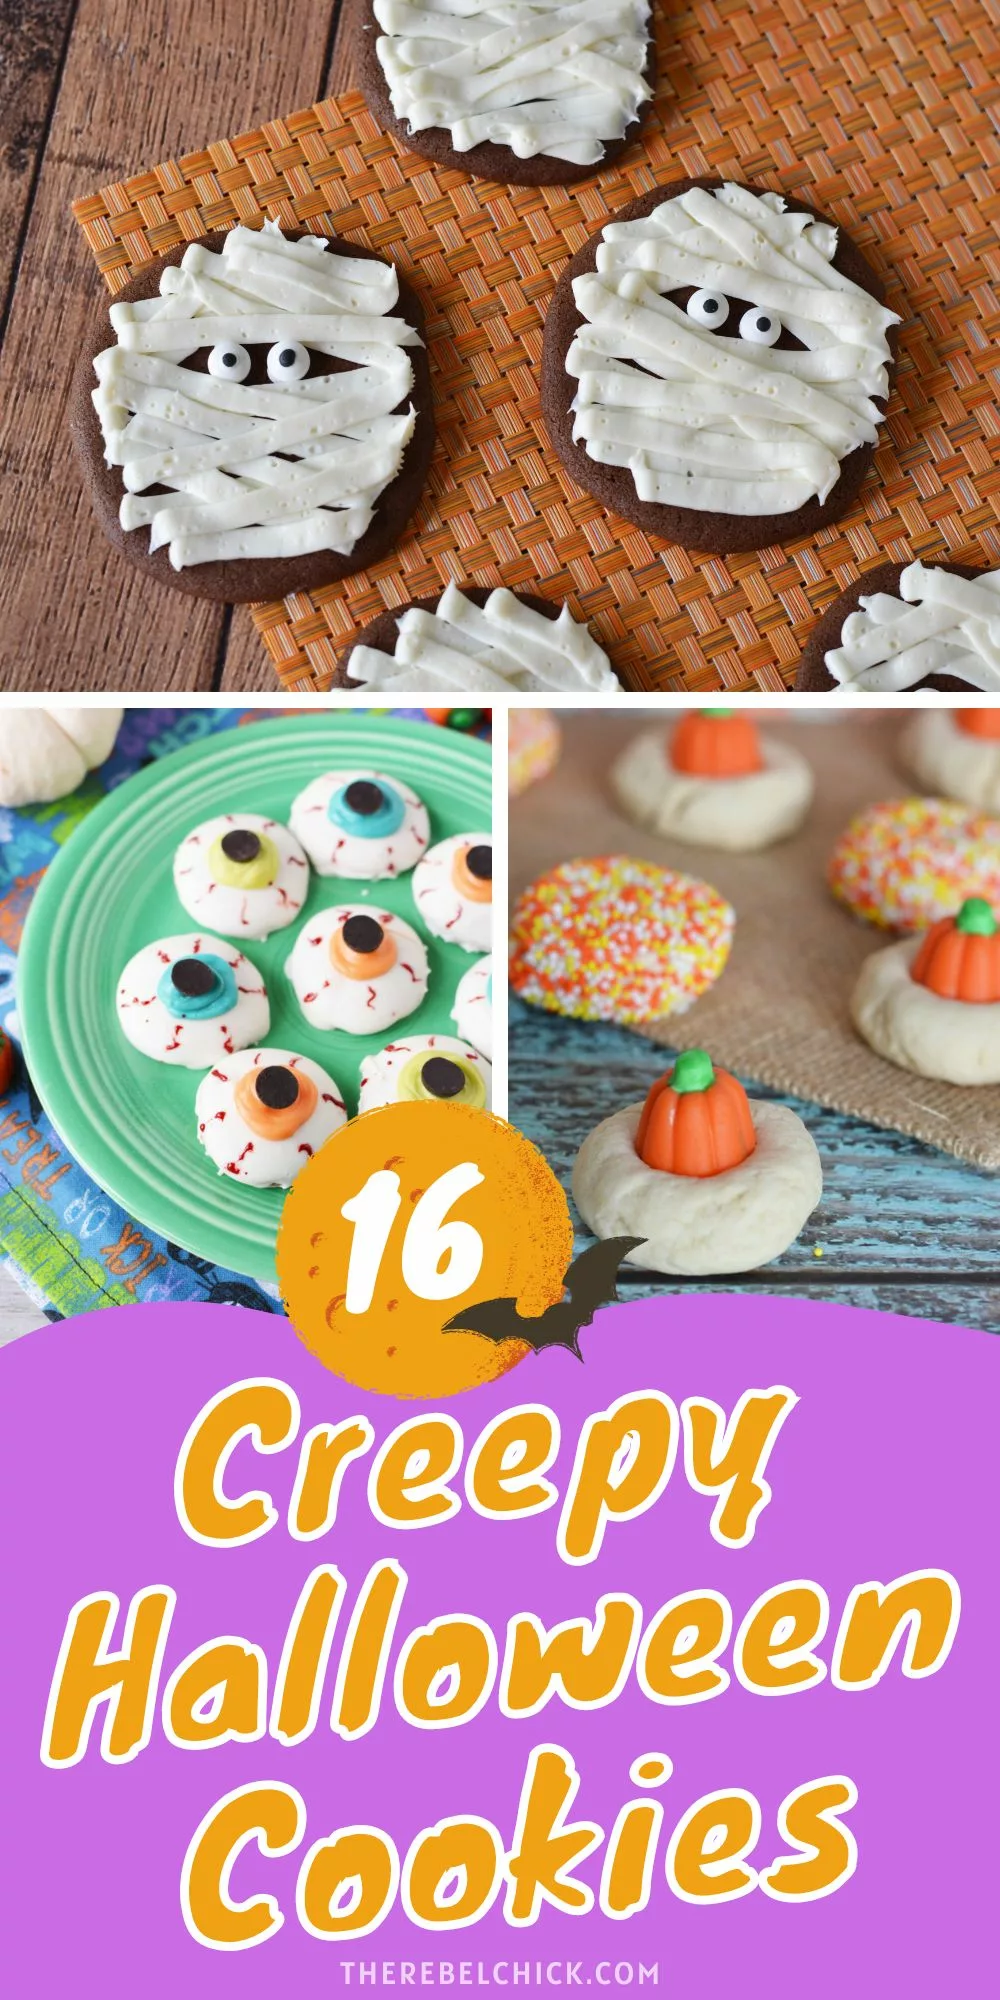 Creepy Cookies for Halloween